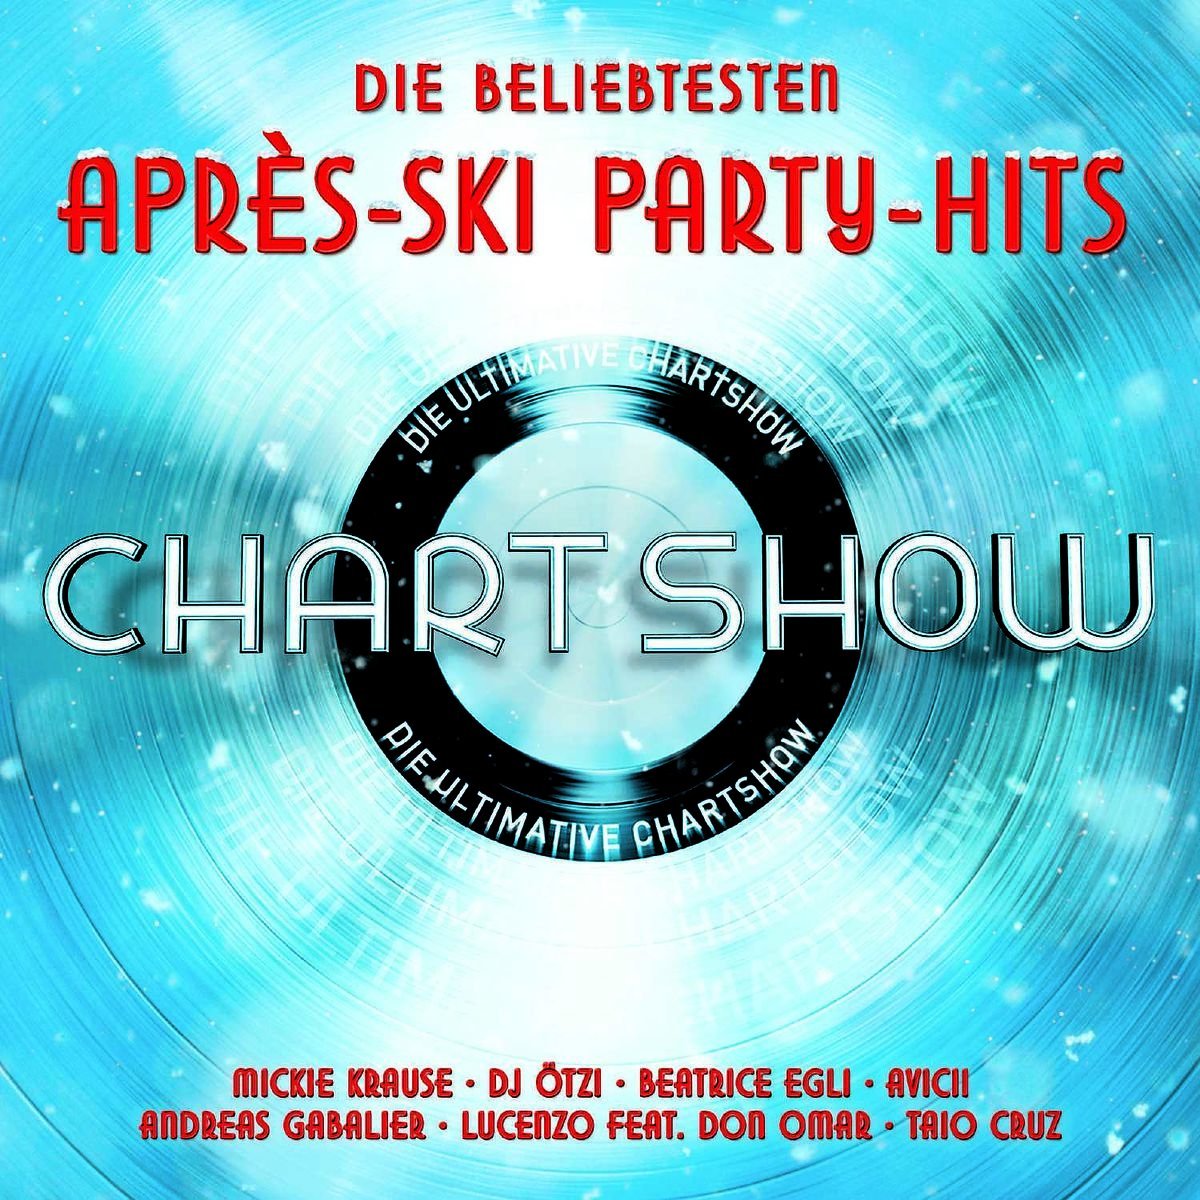 Die beliebtesten Après-Ski-Party-Hits ultimative chartshow